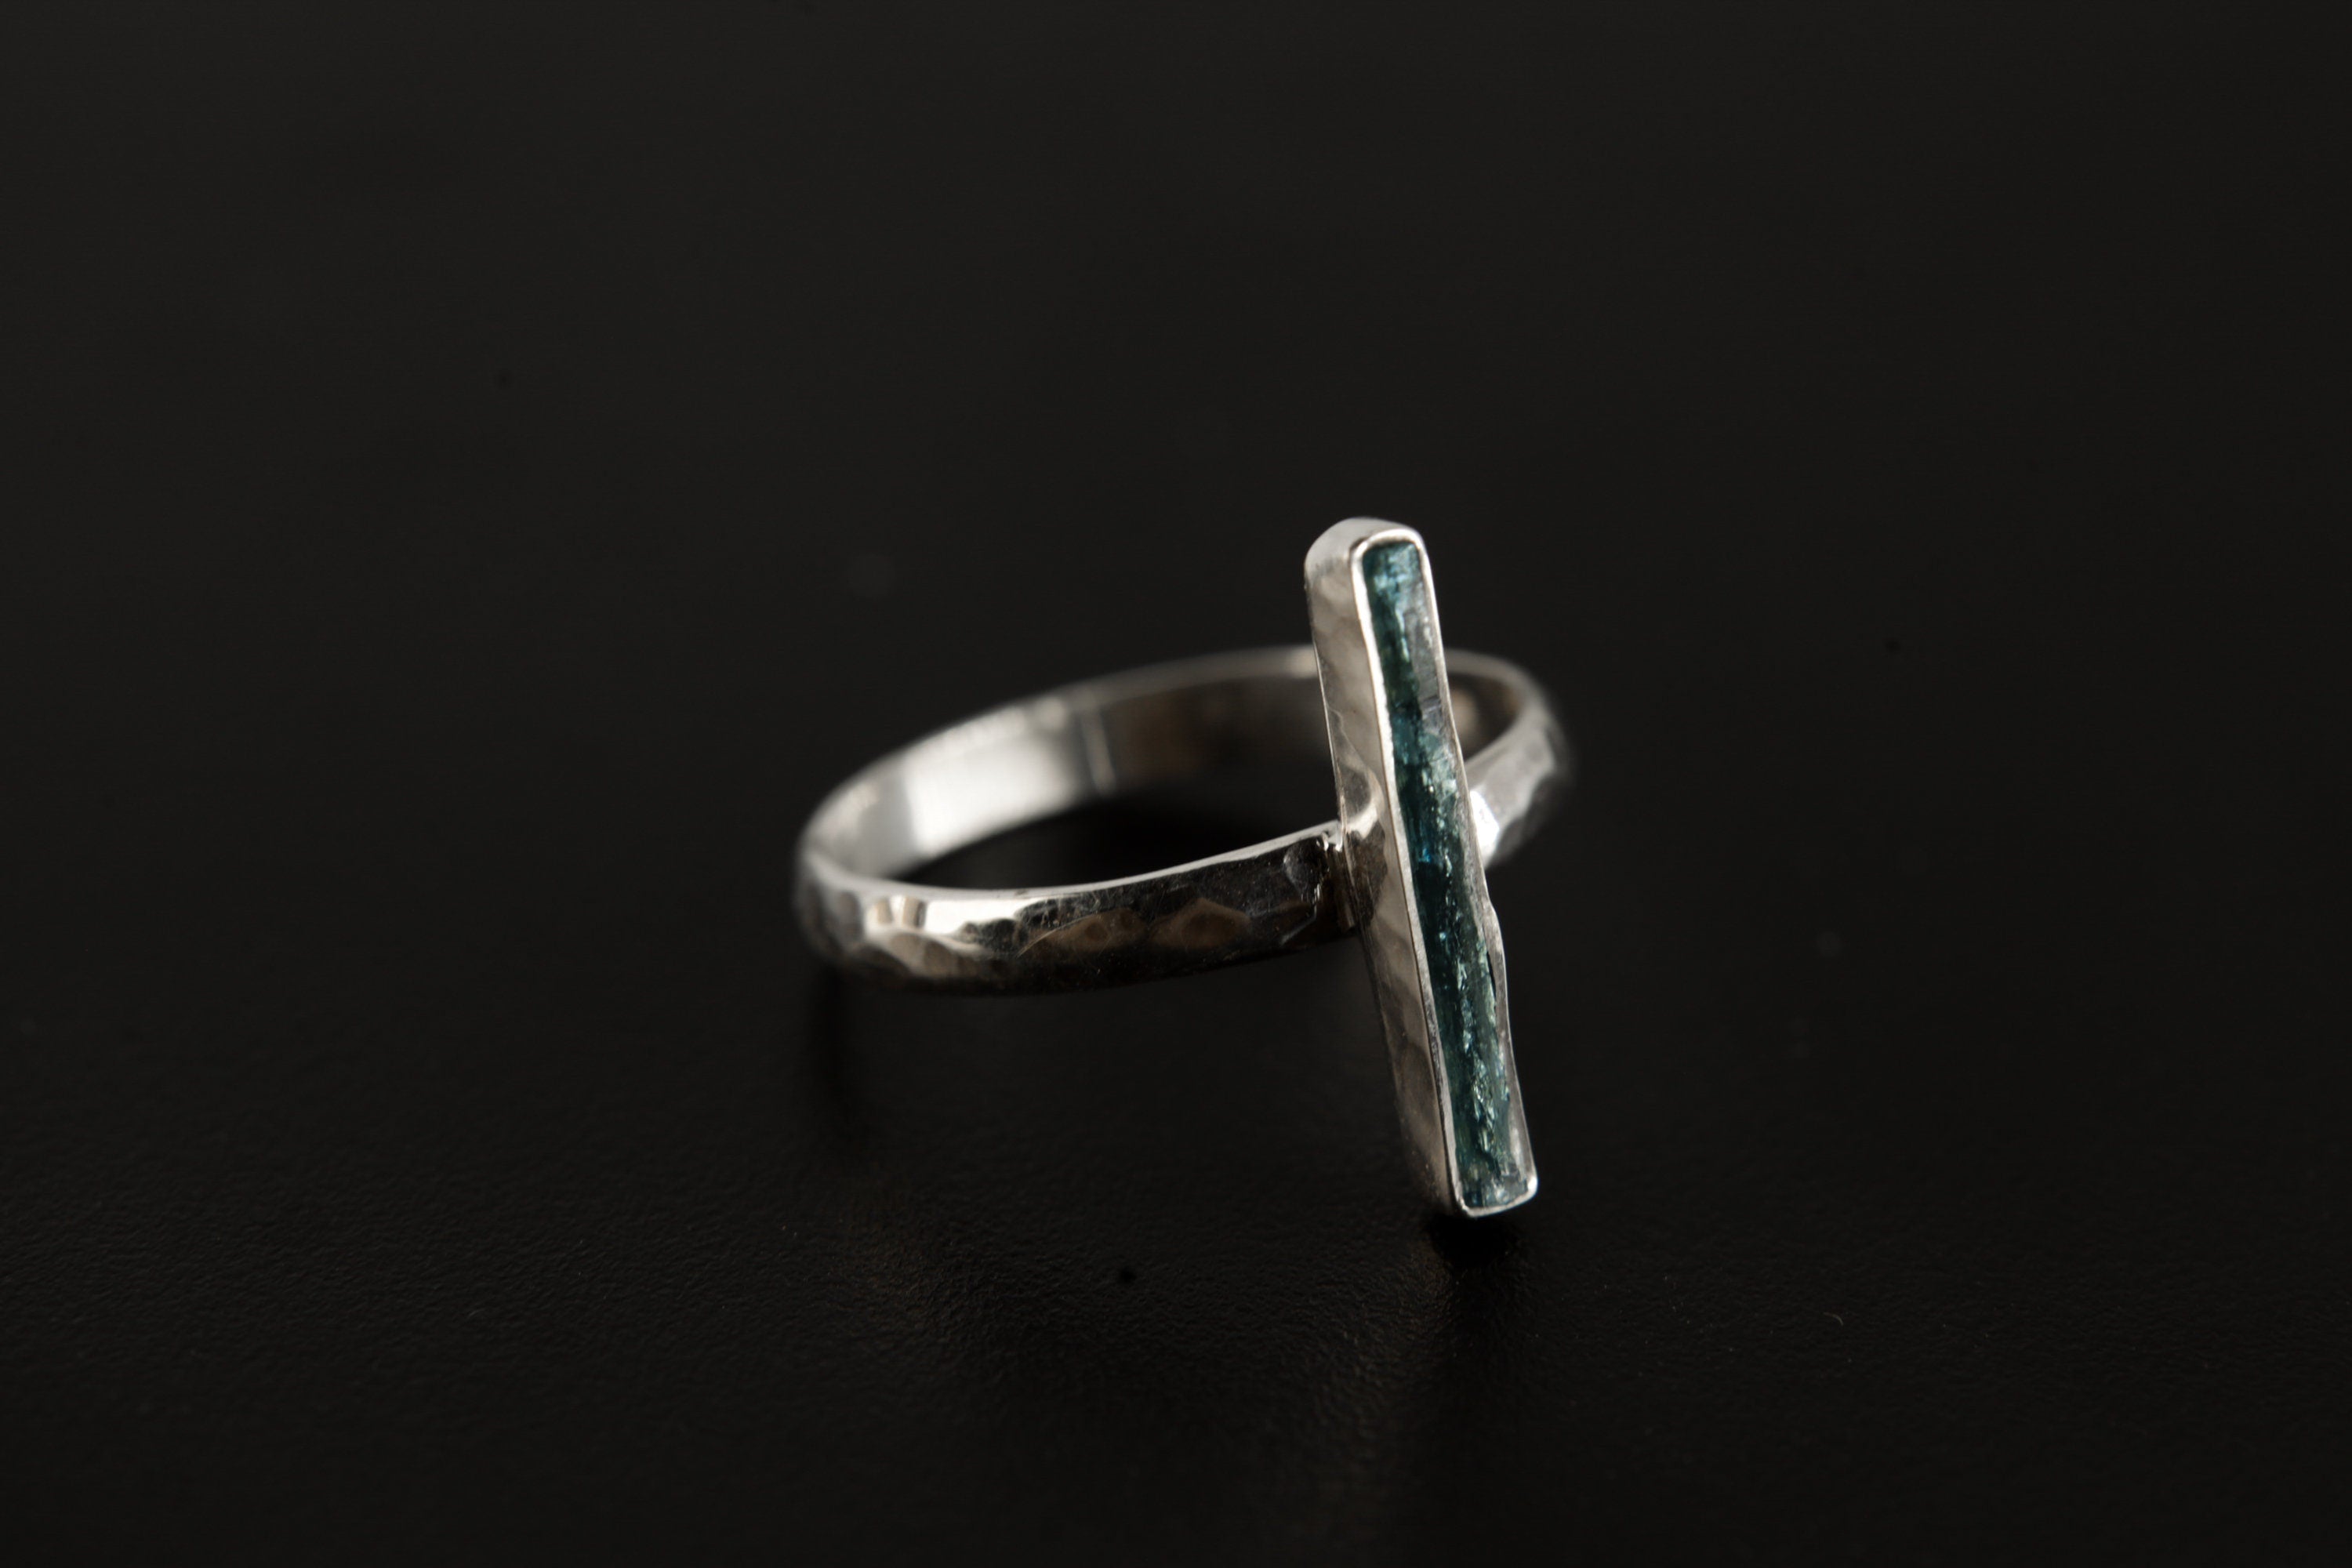 Azure Rhythm: Blue Kyanite- Sterling Silver Ring - Hammer Textured & Shiny Finish - Size 9 US - NO/02